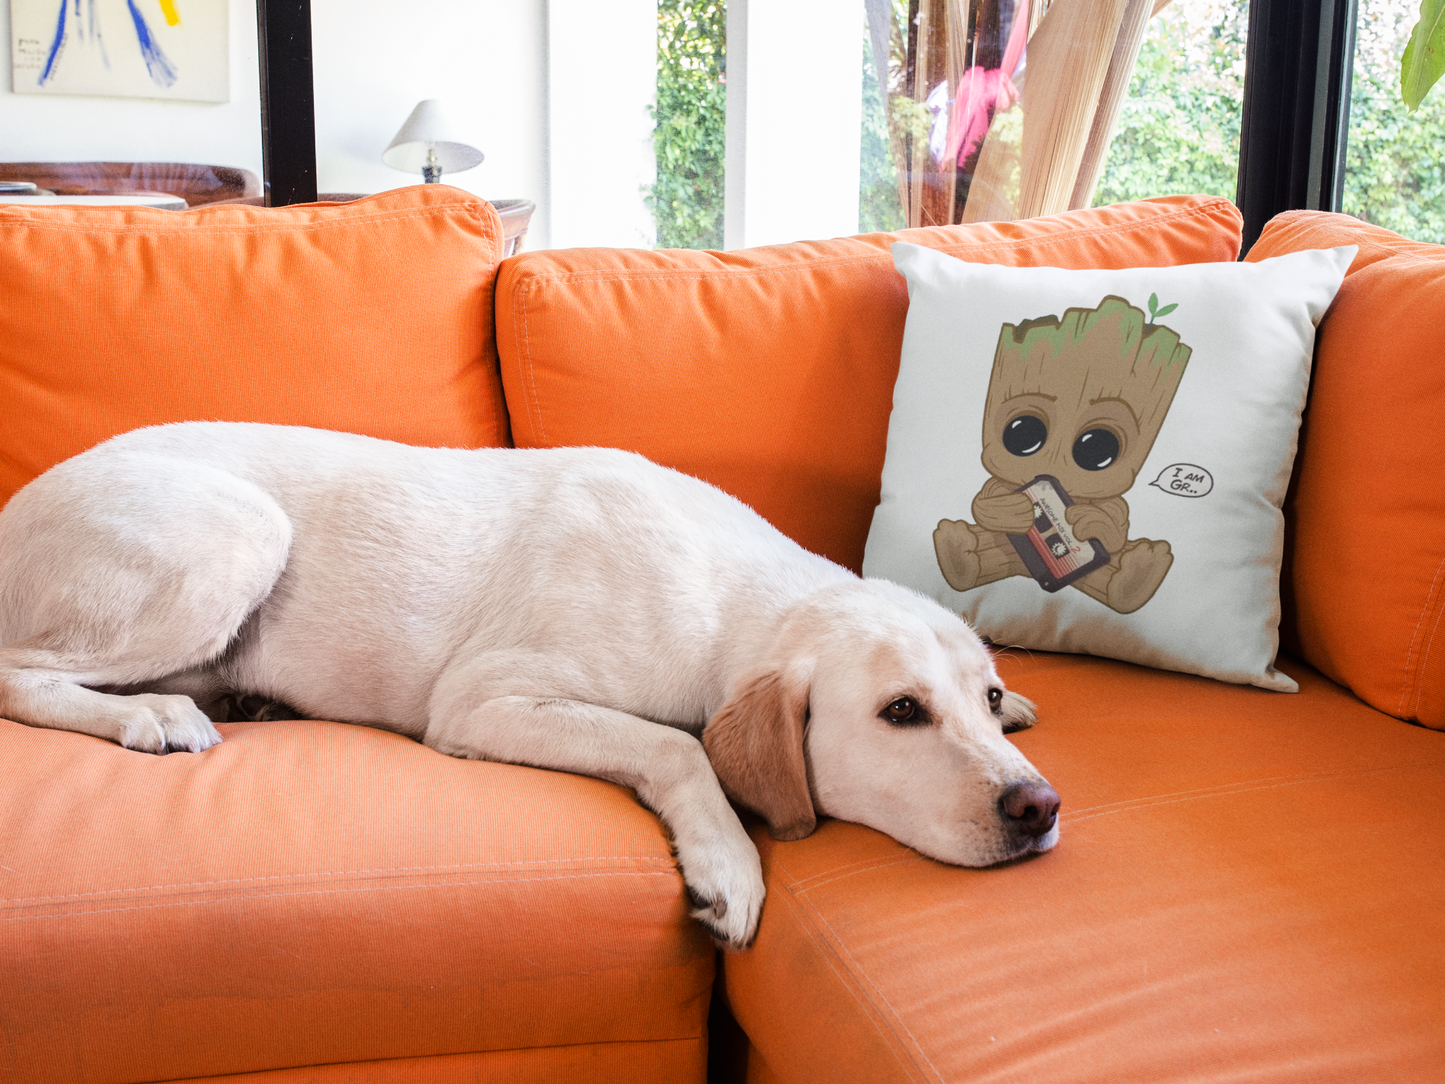 Baby Groot Printed Cushion